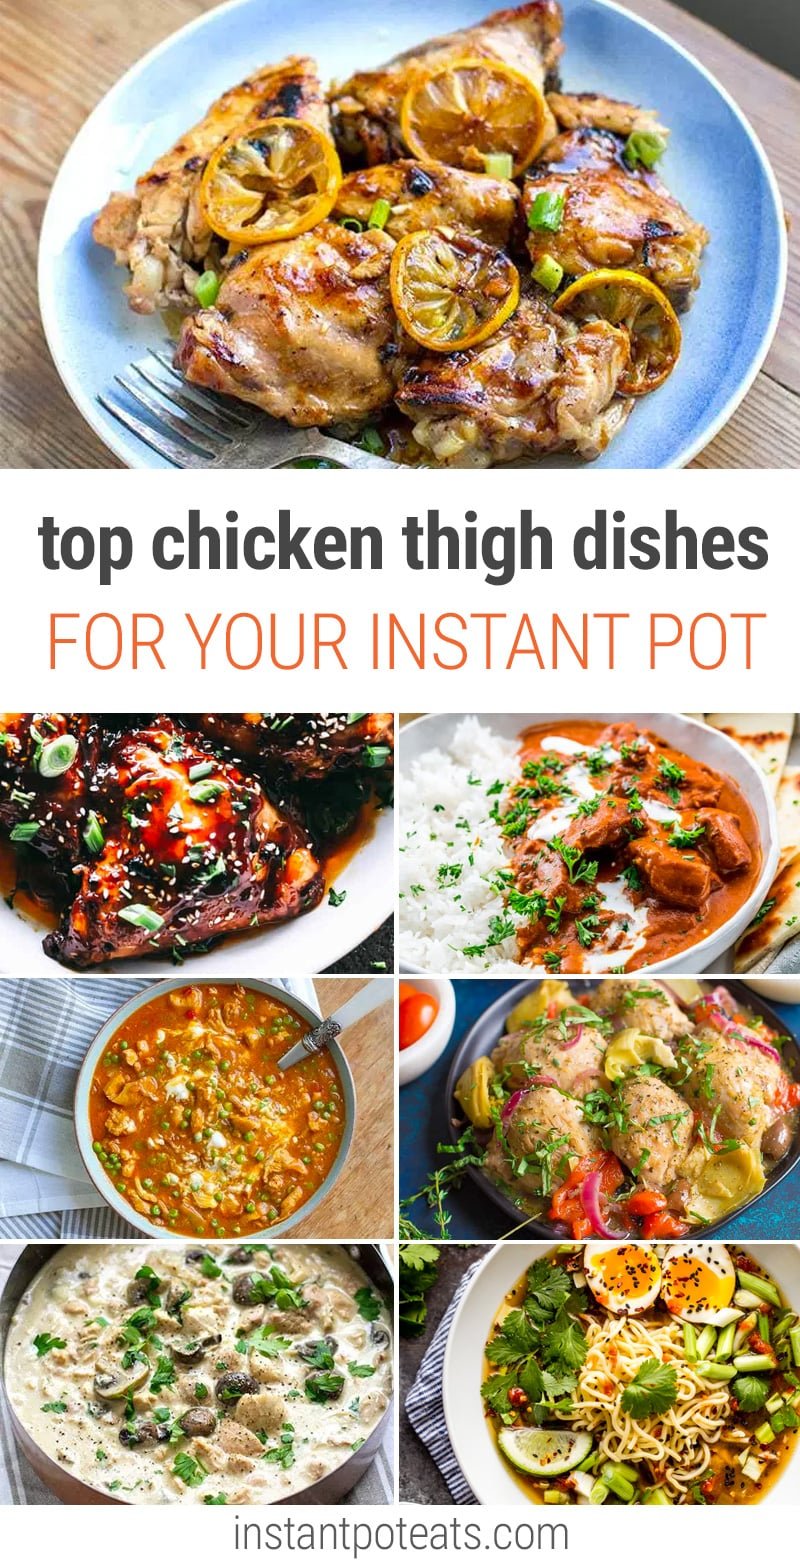 Instant Pot Chicken Thigh Recipes